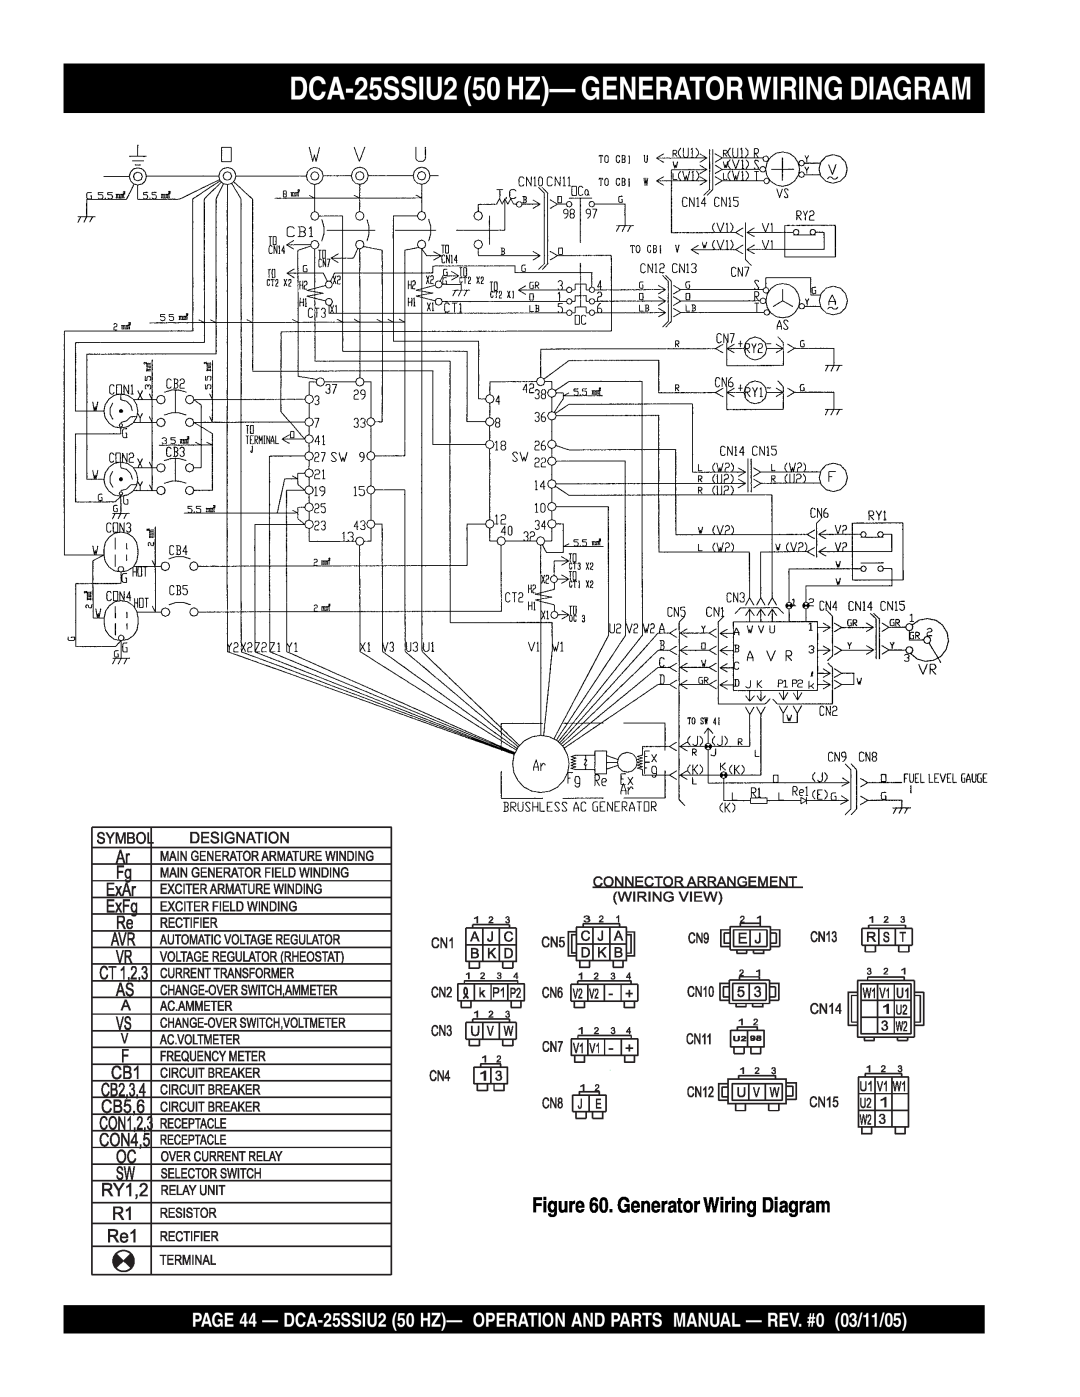 Multiquip operation manual DCA-25SSIU2 50 HZ- GENERATORWIRING DIAGRAM, Generator Wiring Diagram 